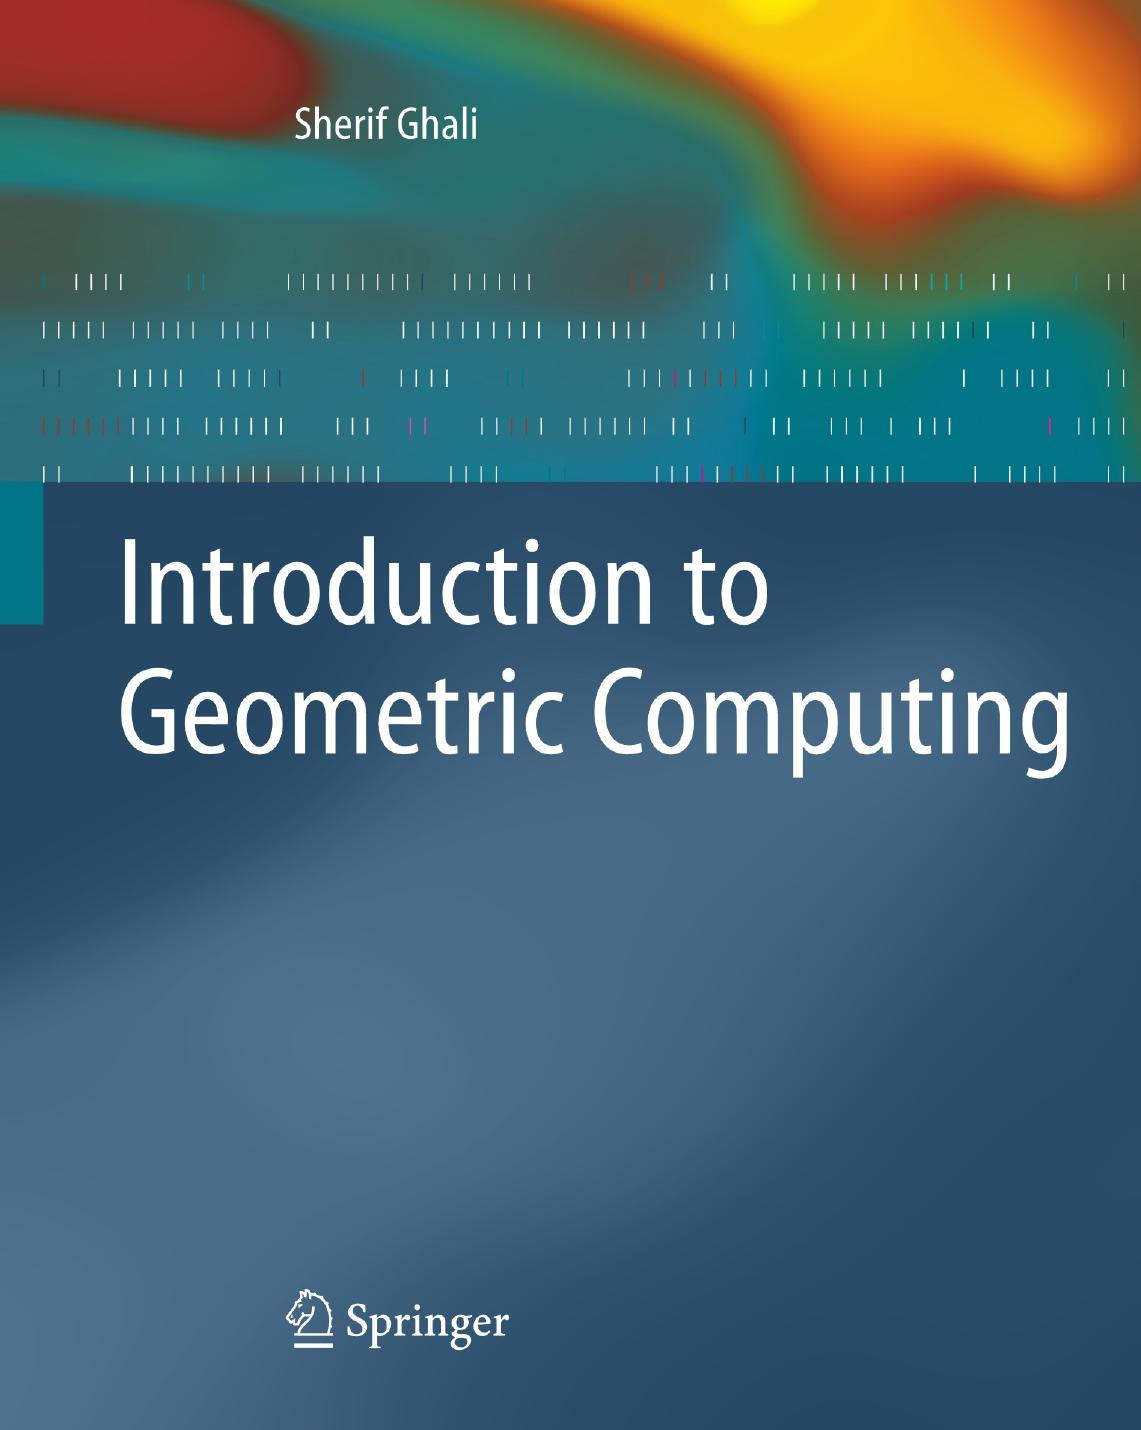 Introduction to Geometric Computing by Sherif Ghali